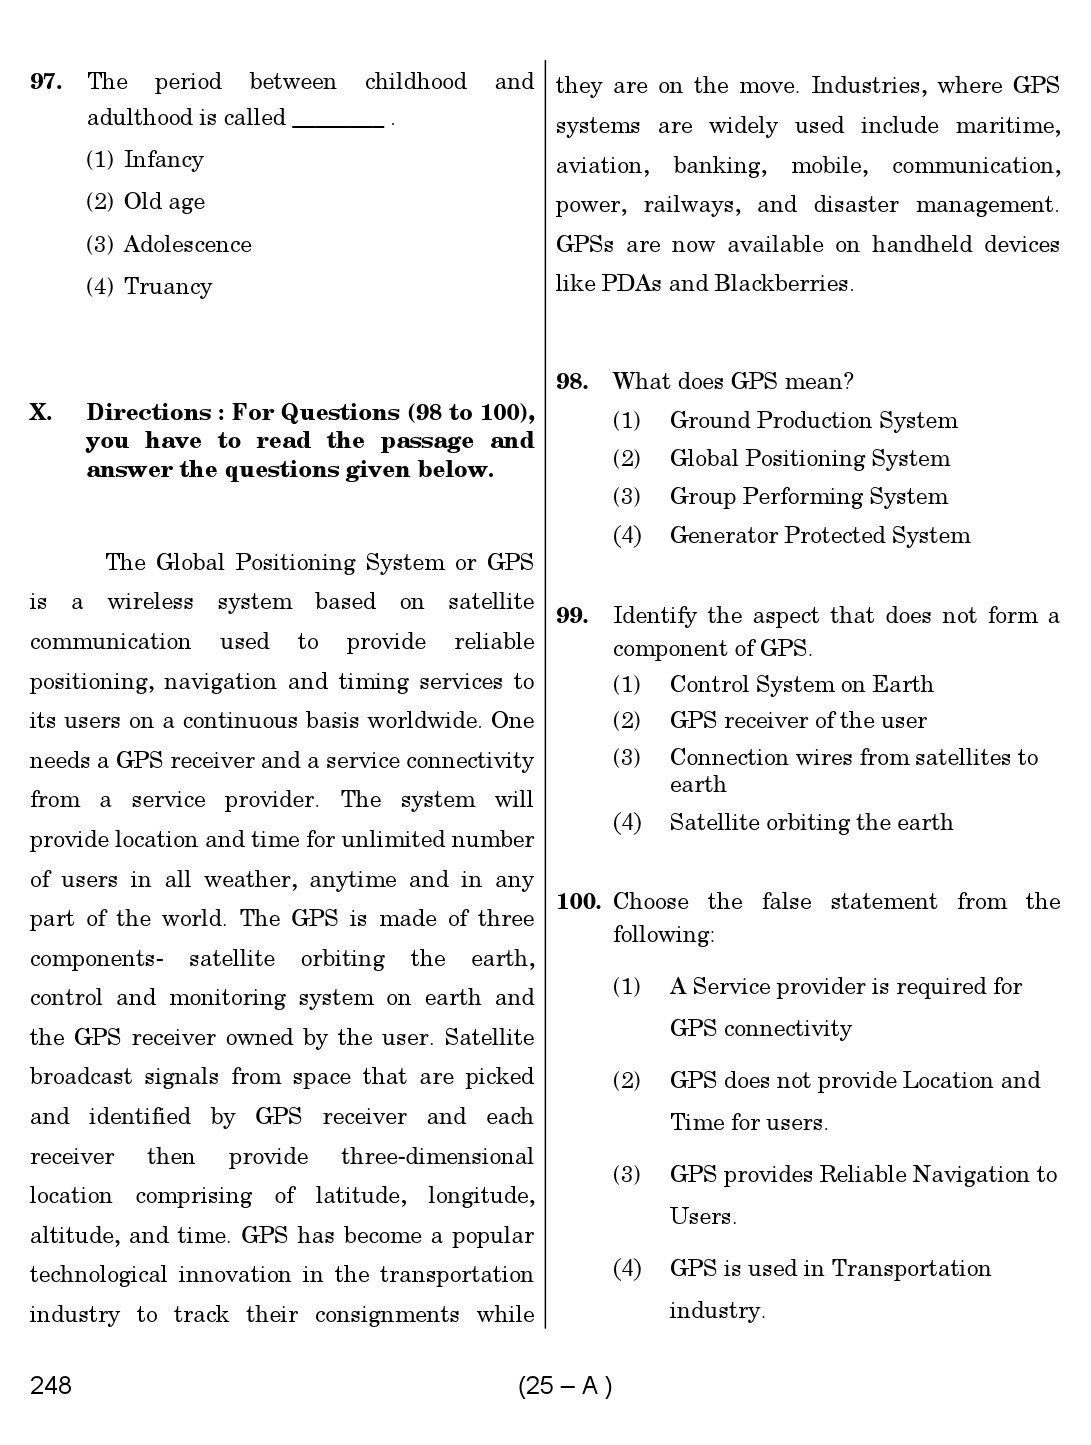 Karnataka PSC Laboratory Assistant Exam Sample Question Paper 25